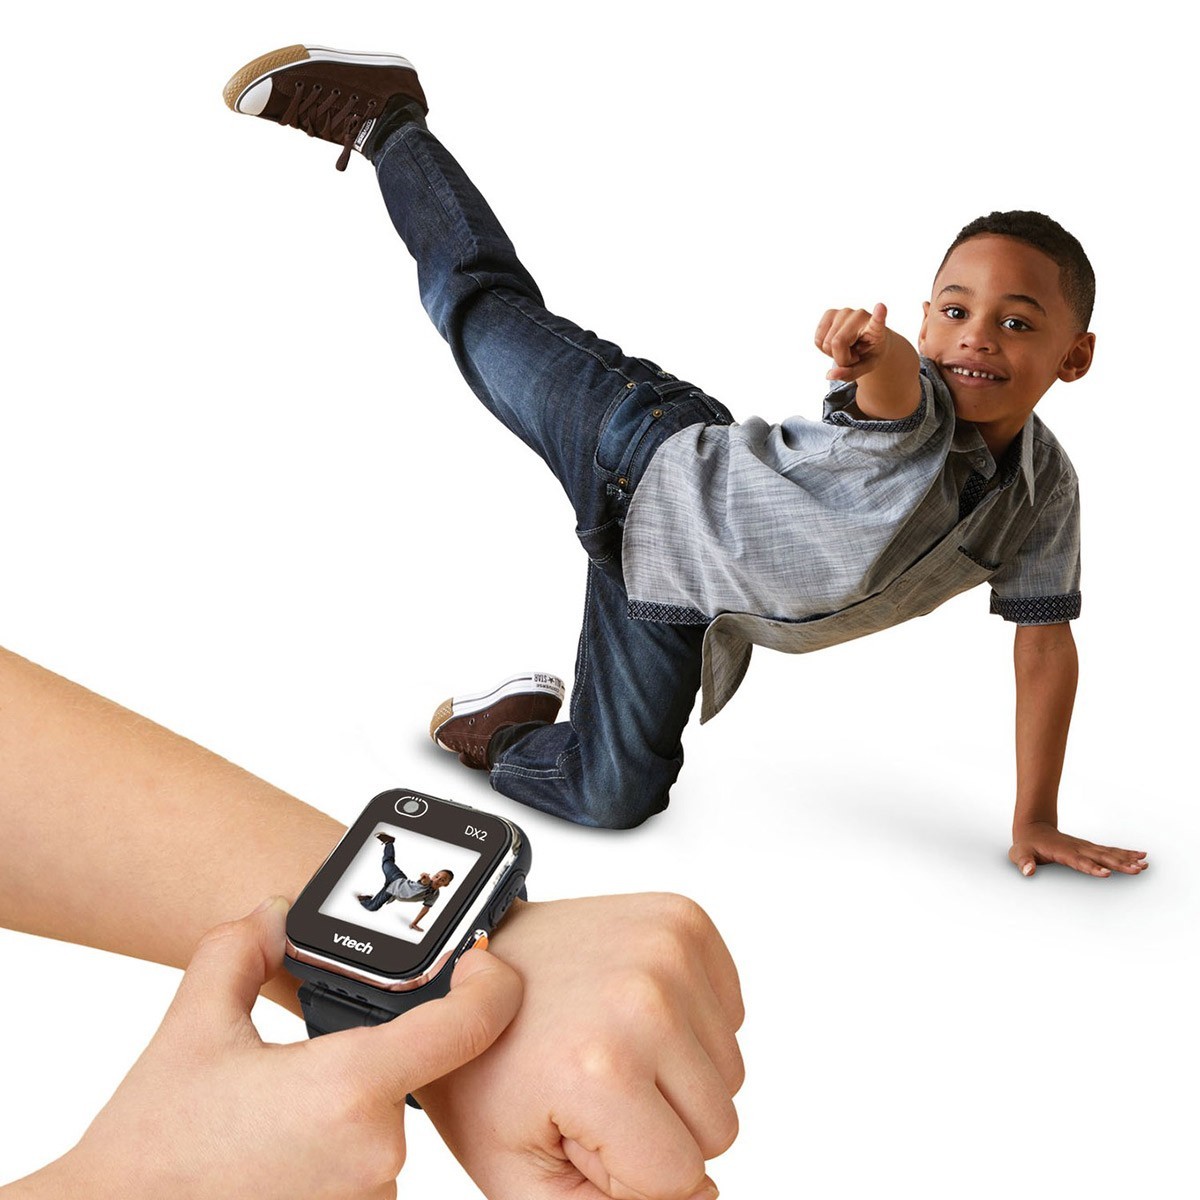 Vtech - Kidizoom Smart Watch DX 2 - Black